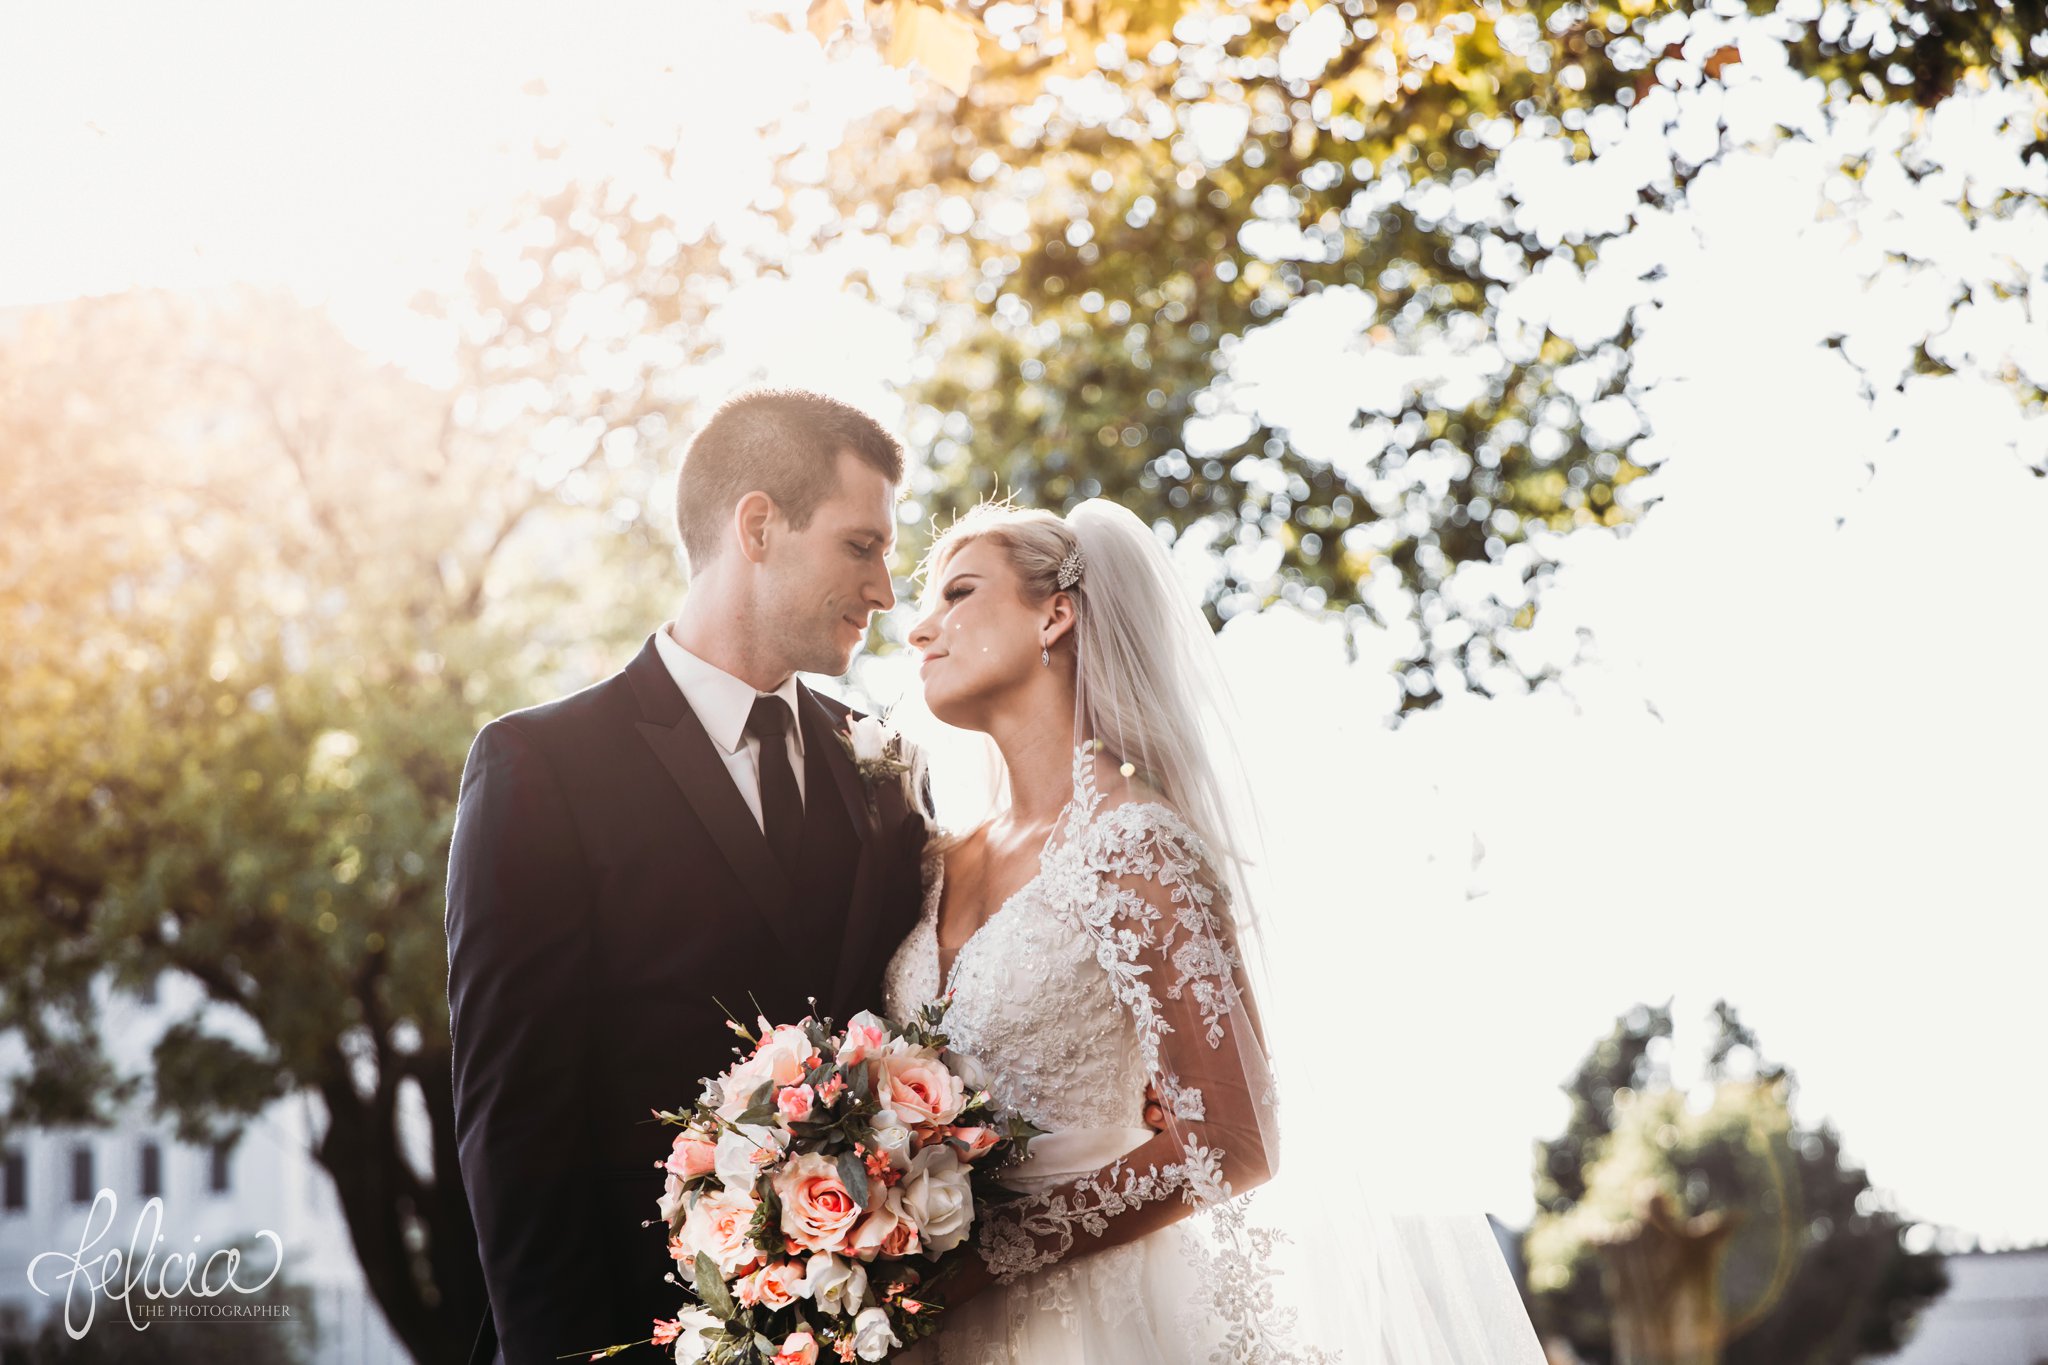 images by feliciathephotographer.com | wedding photographer | kansas city | redemptorist | classic | portrait | bride and groom | romantic | whimsical | pink floral bouquet | sunset | golden hour | trees | long sleeve lace dress | navy suit | 